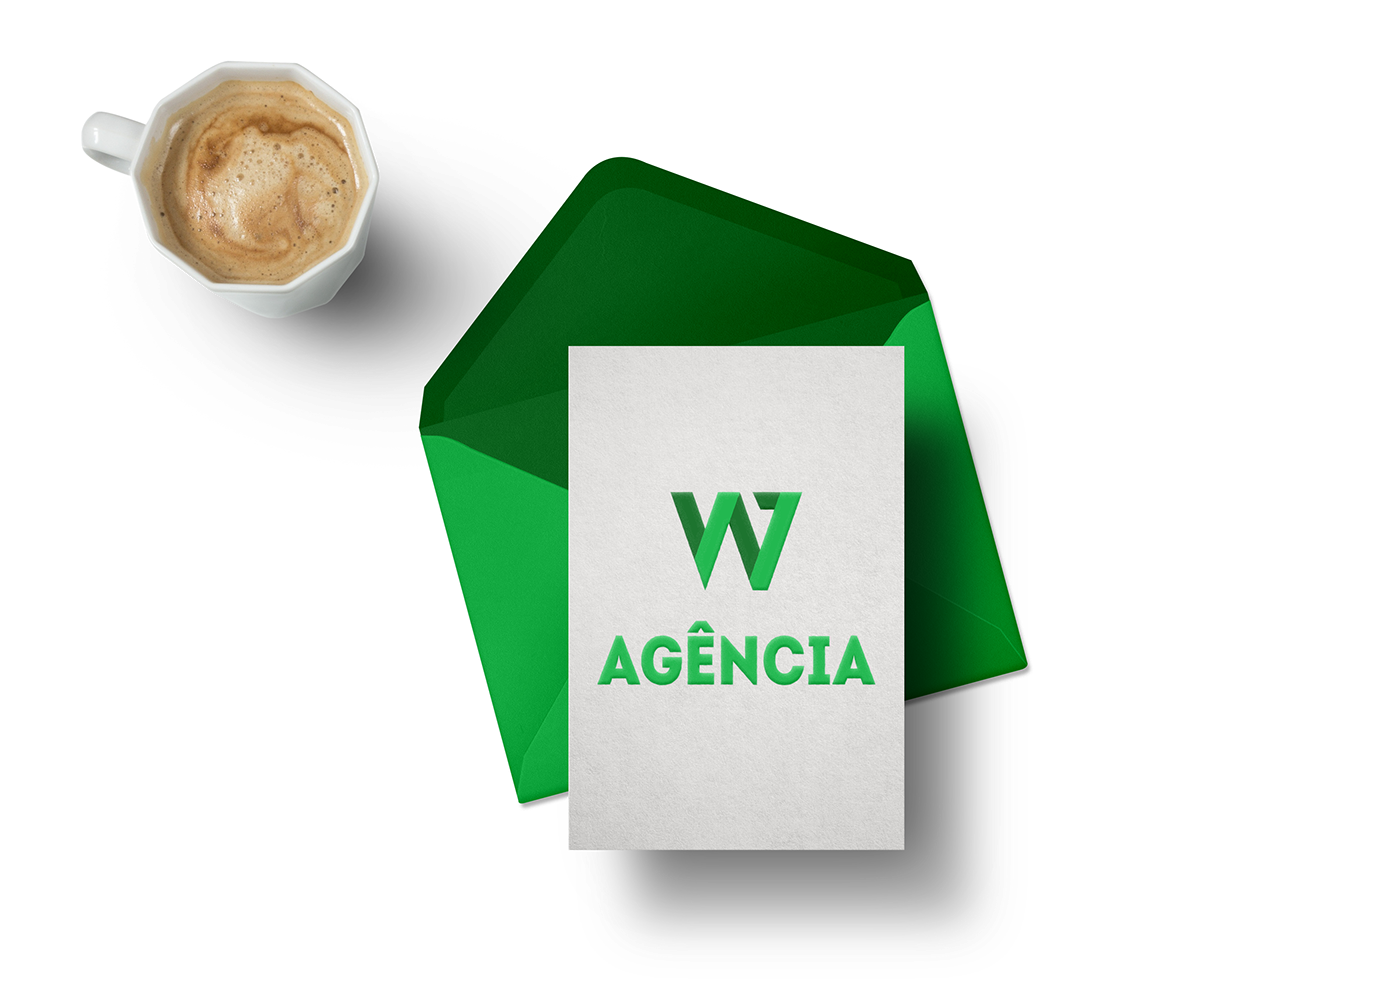 w7 agencia logo marca social media green Verde